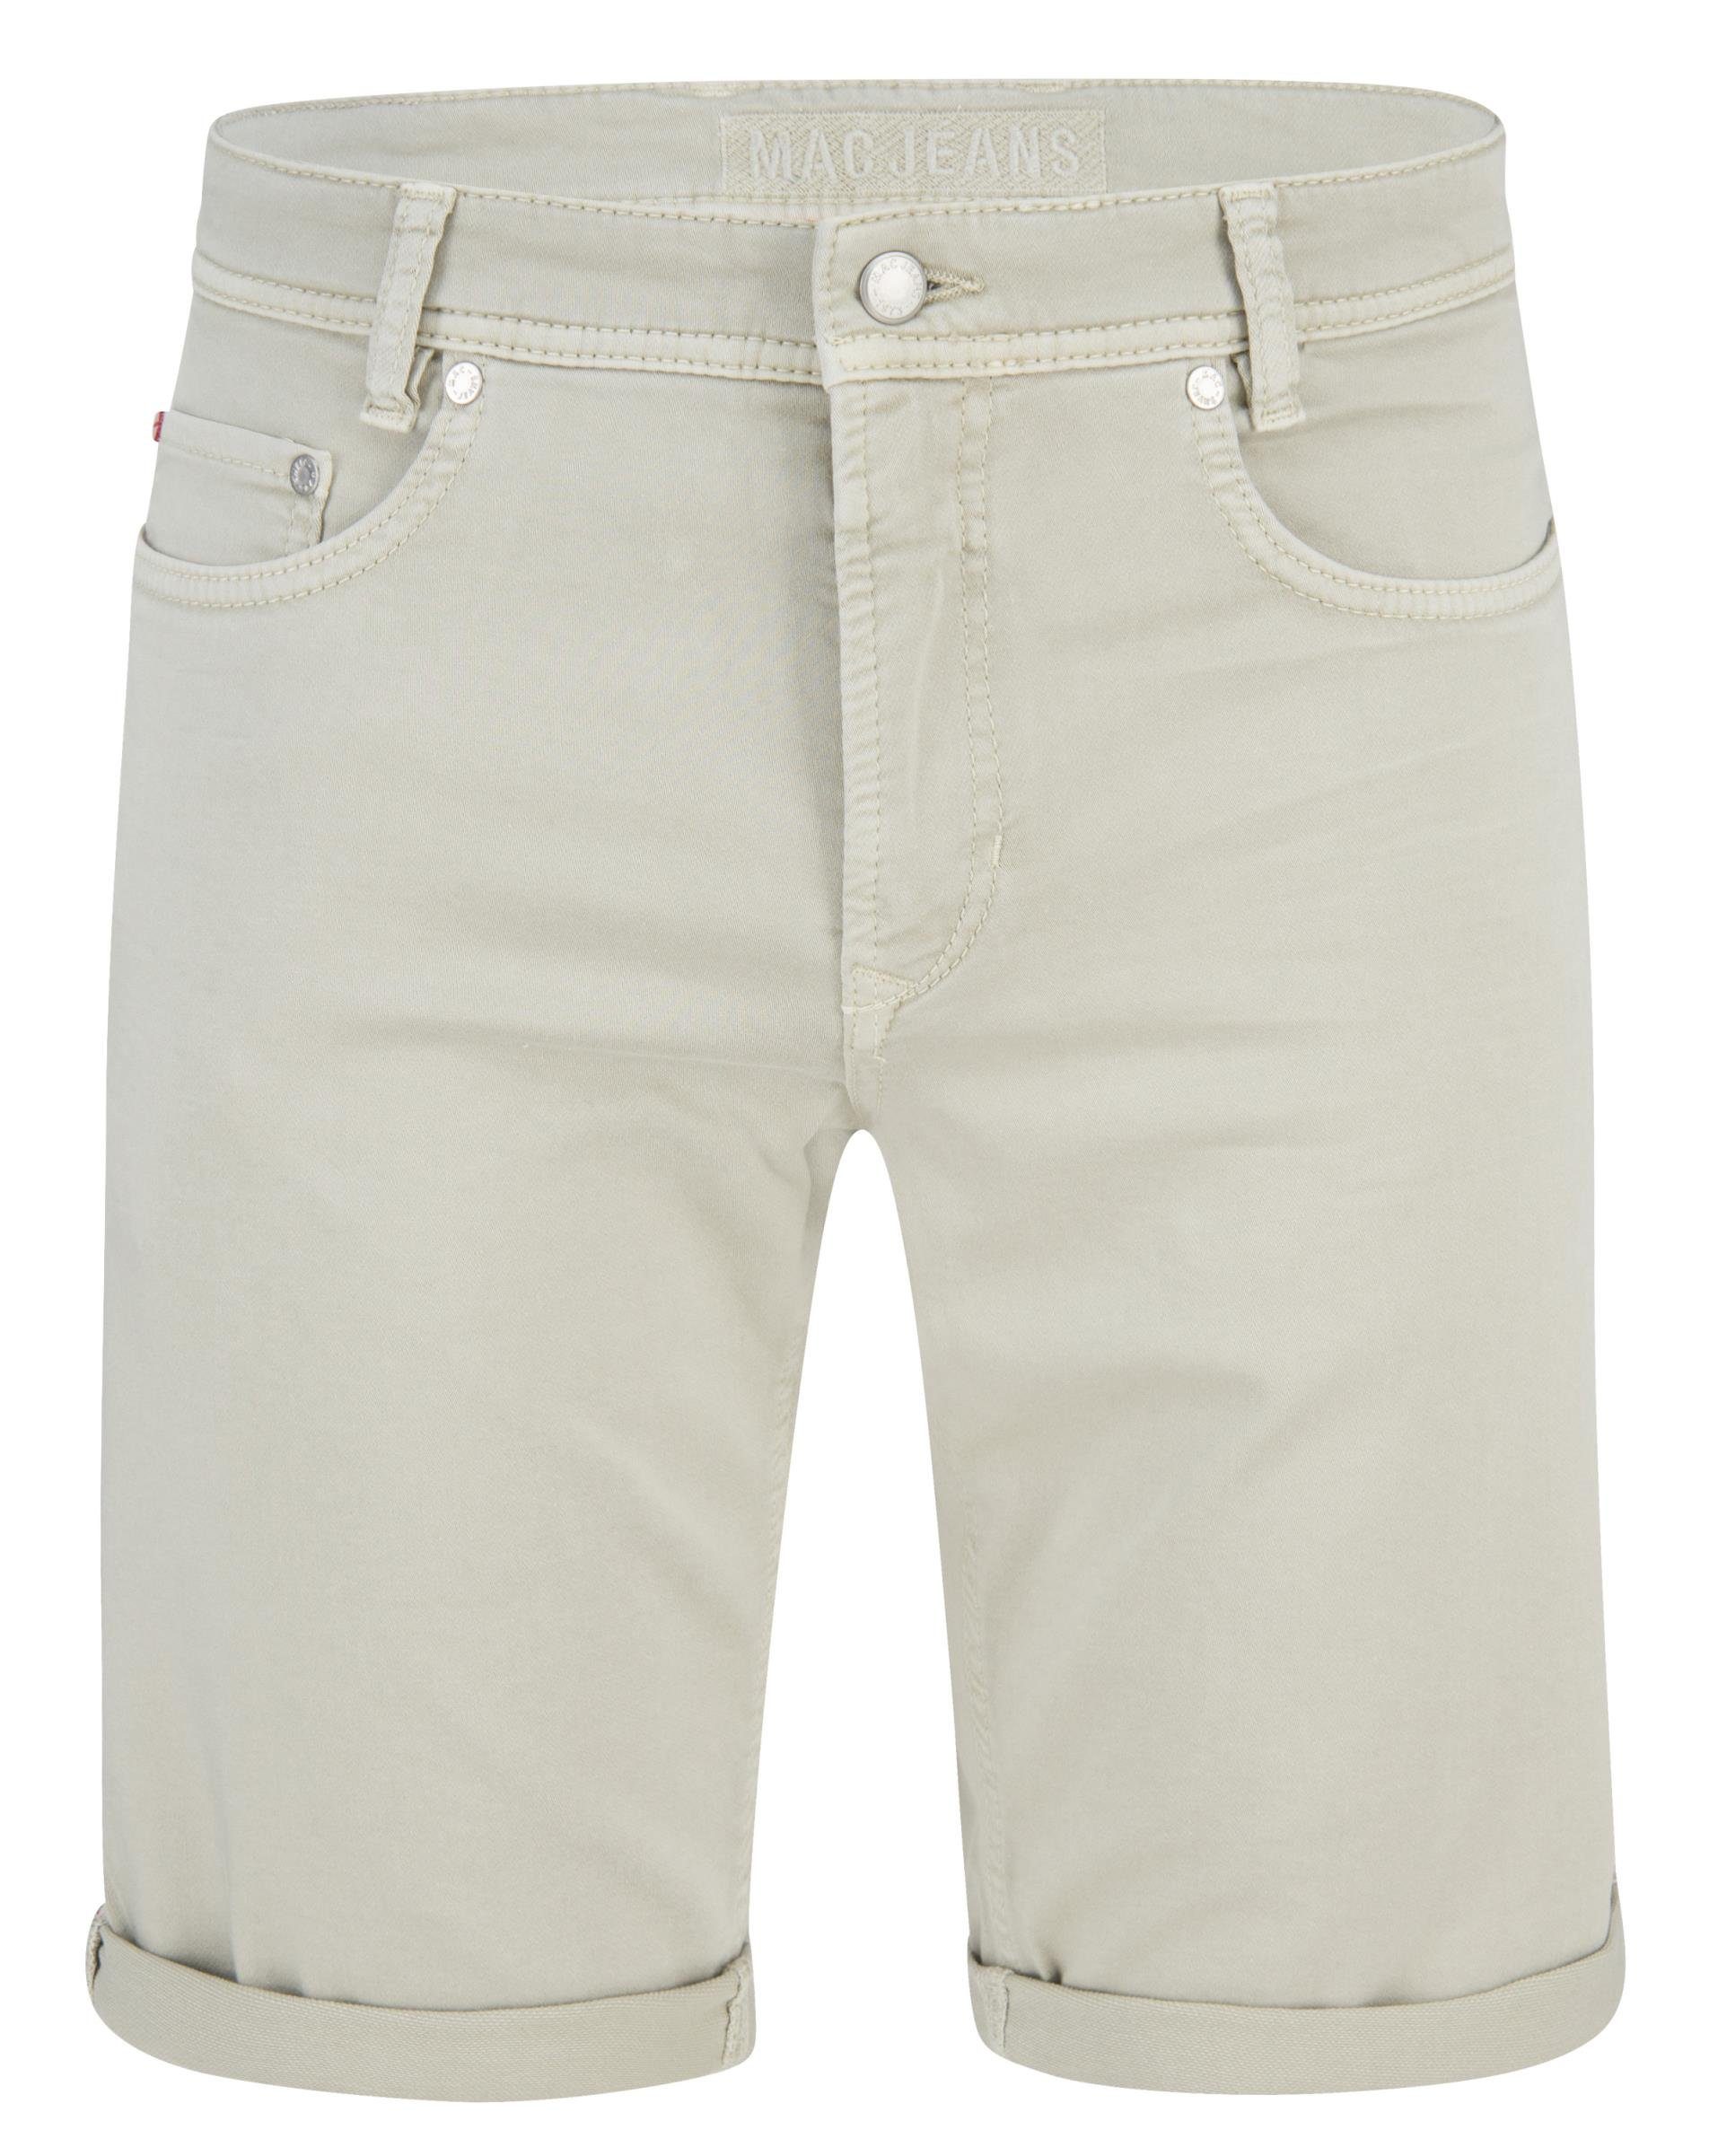 JOG'N 5-Pocket-Jeans MAC sand BERMUDA MAC 0562-00-0994L-H022